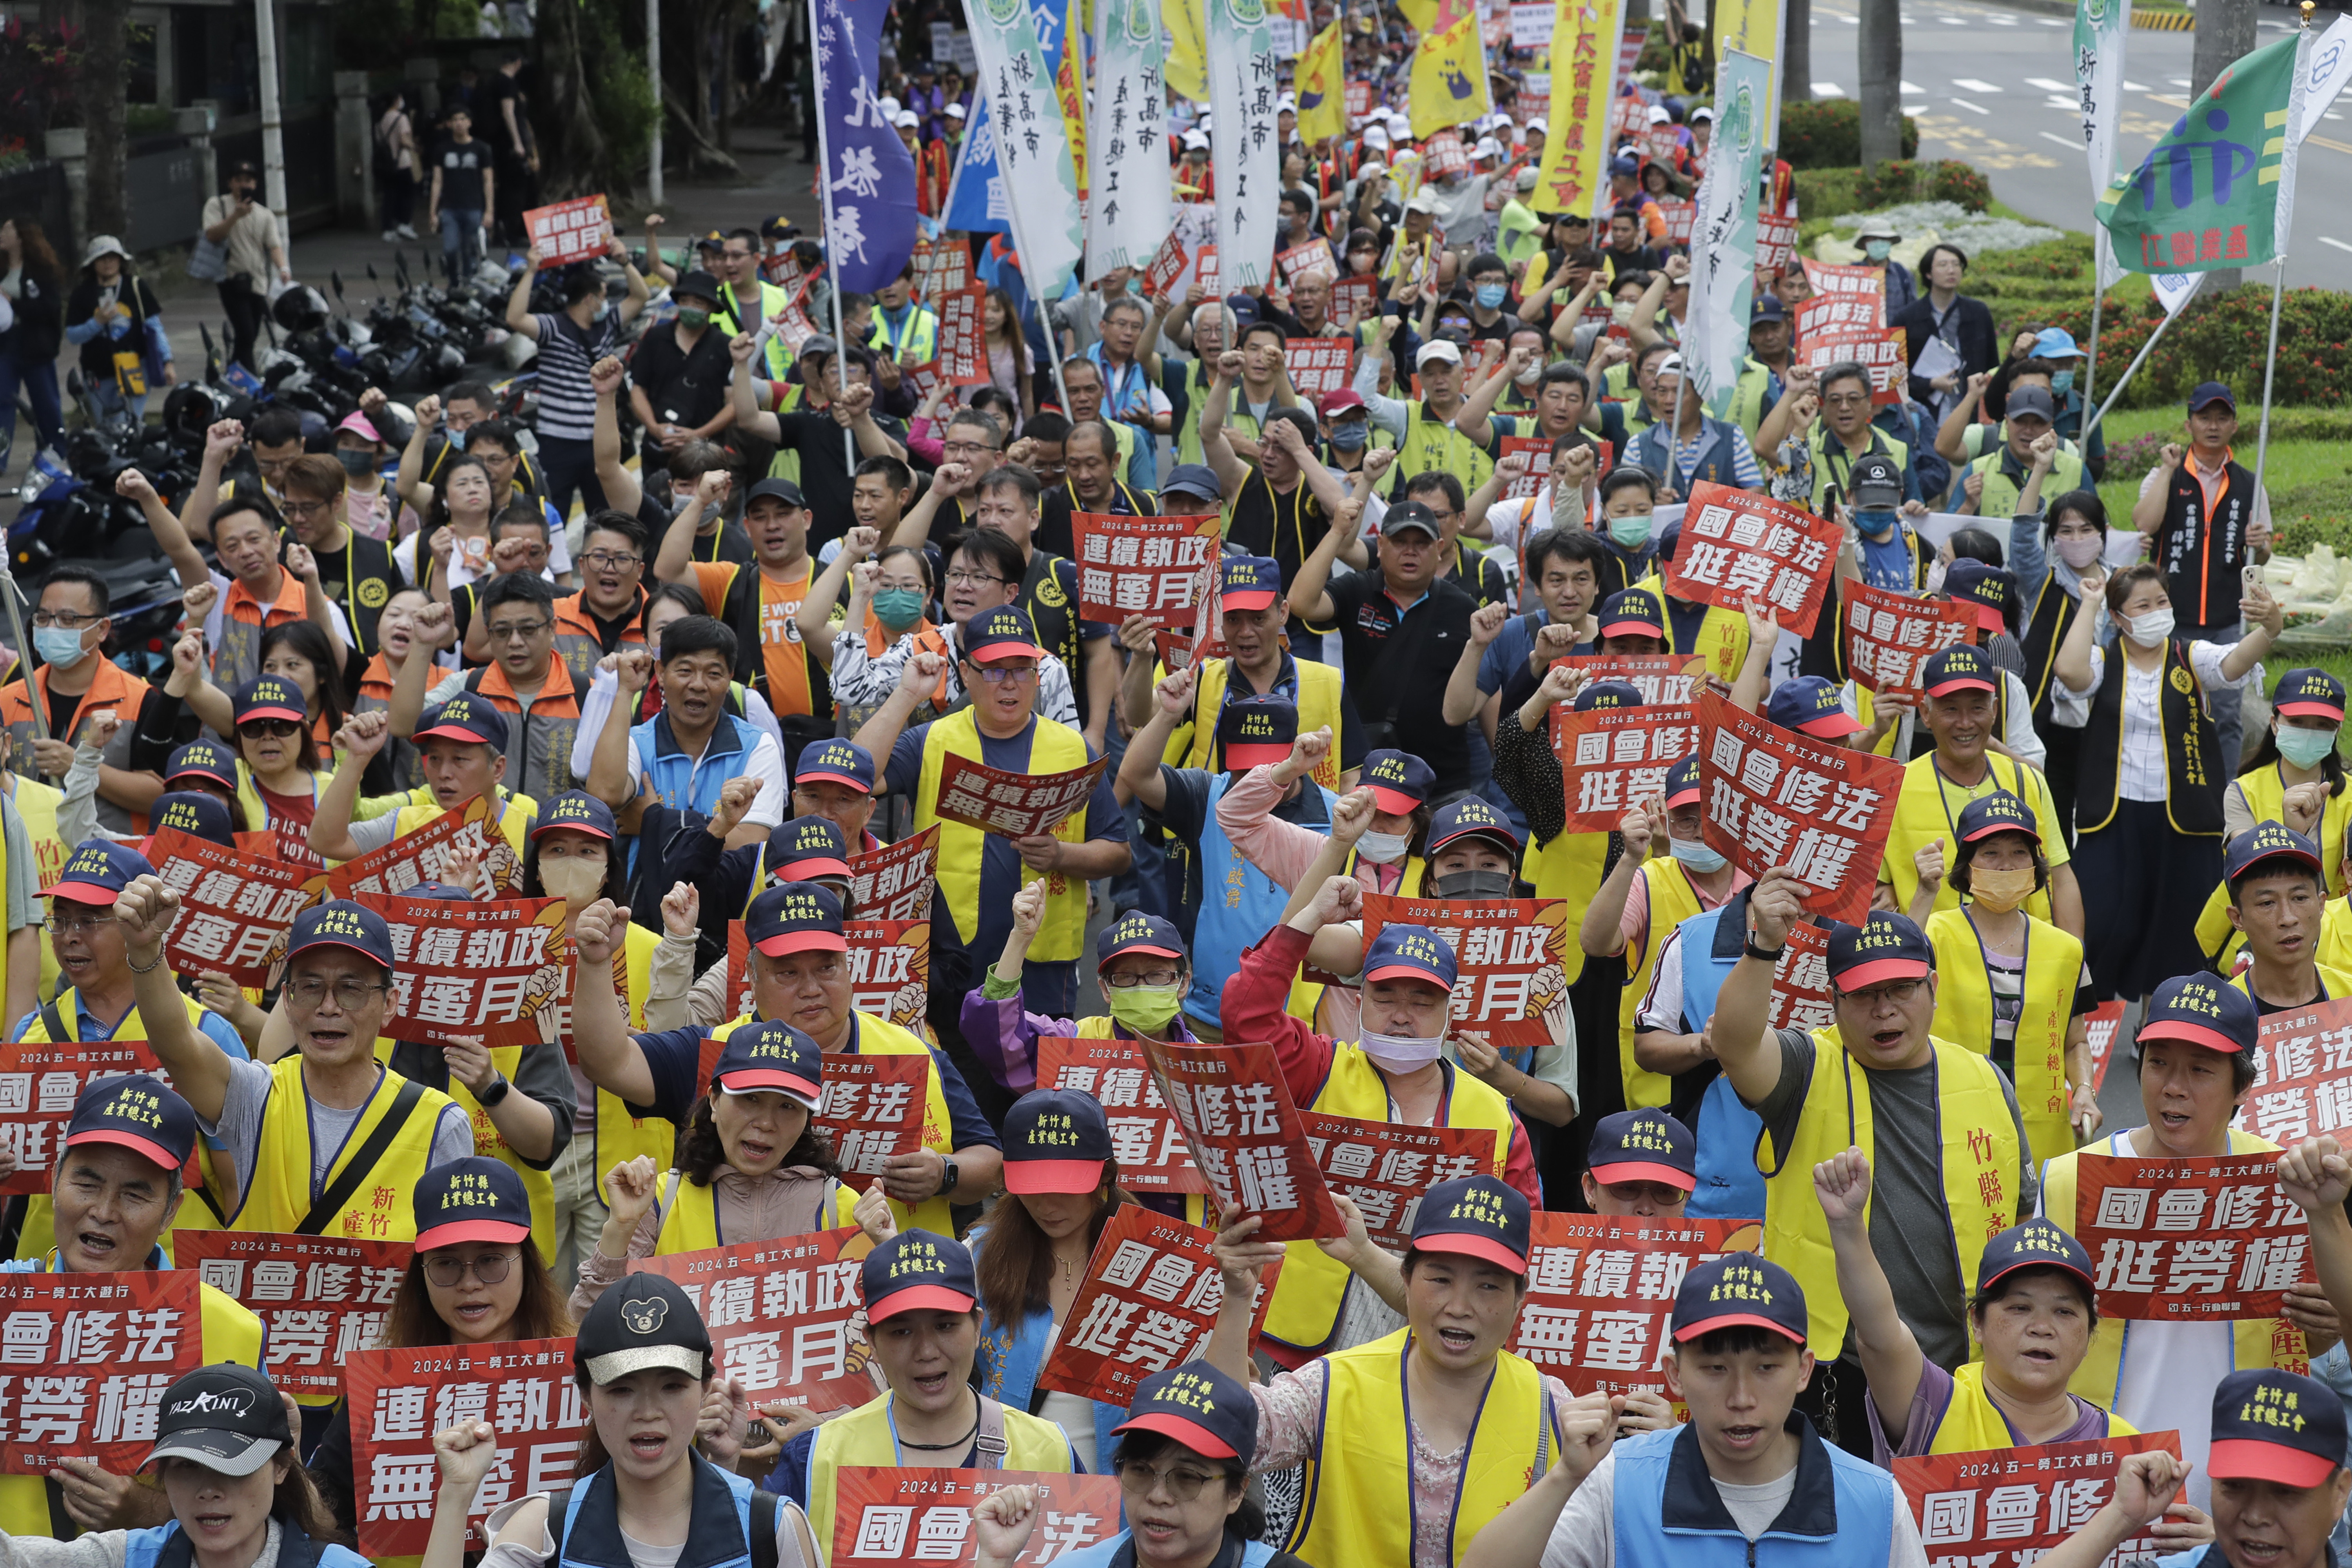 Photos: May Day rallies across Asia demand improve